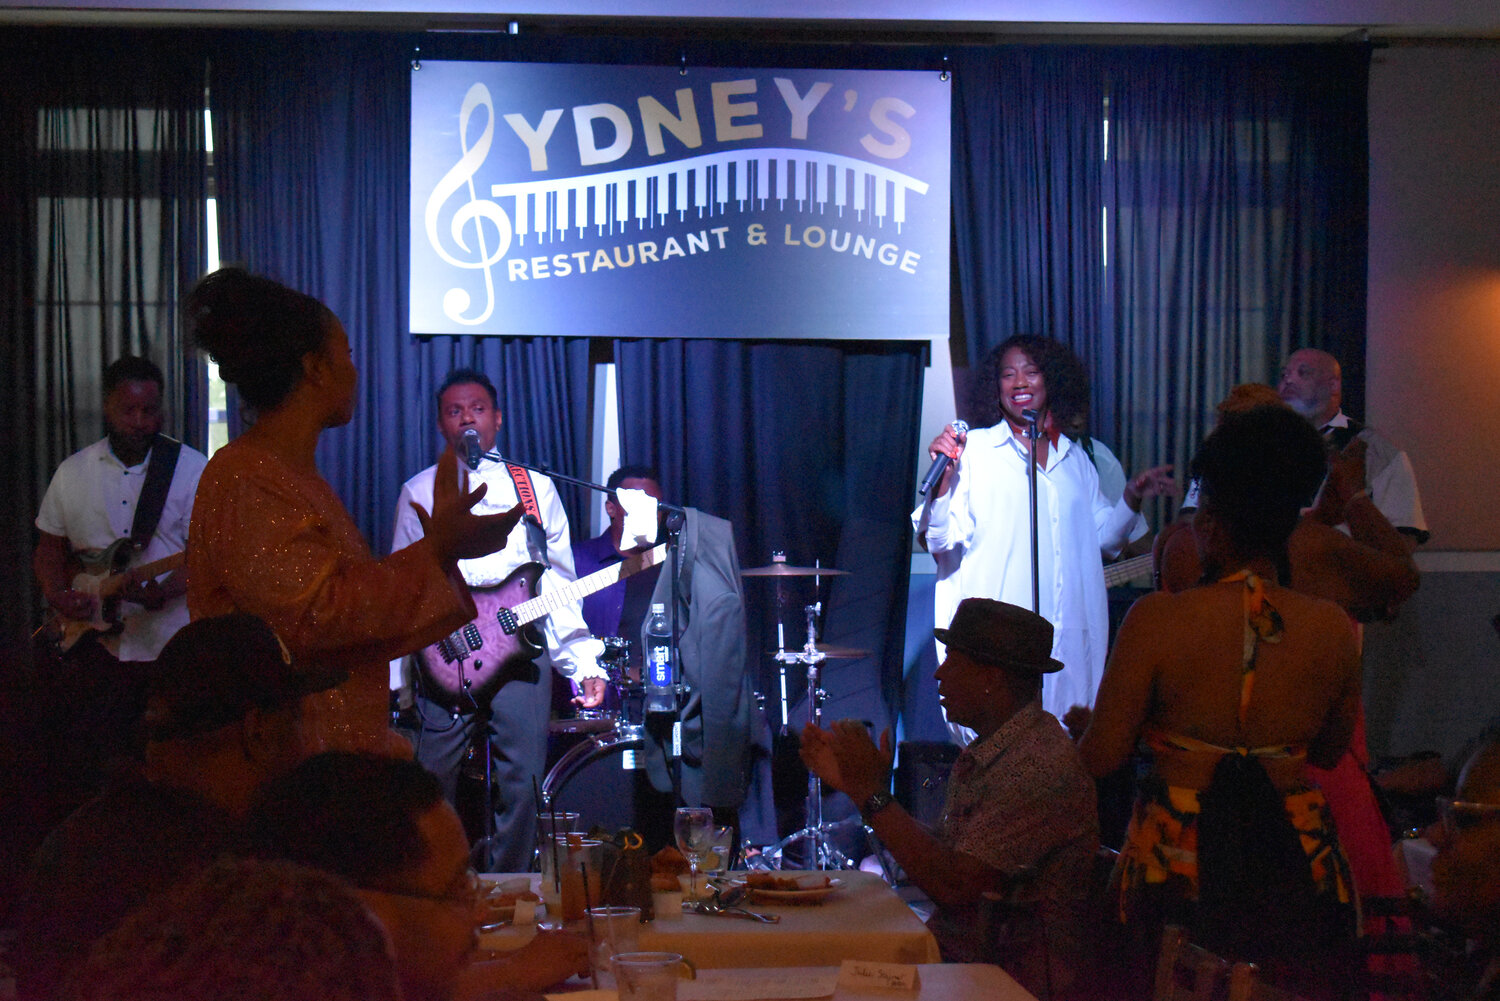 Sydney's Restaurant & Lounge, Milton, Del.